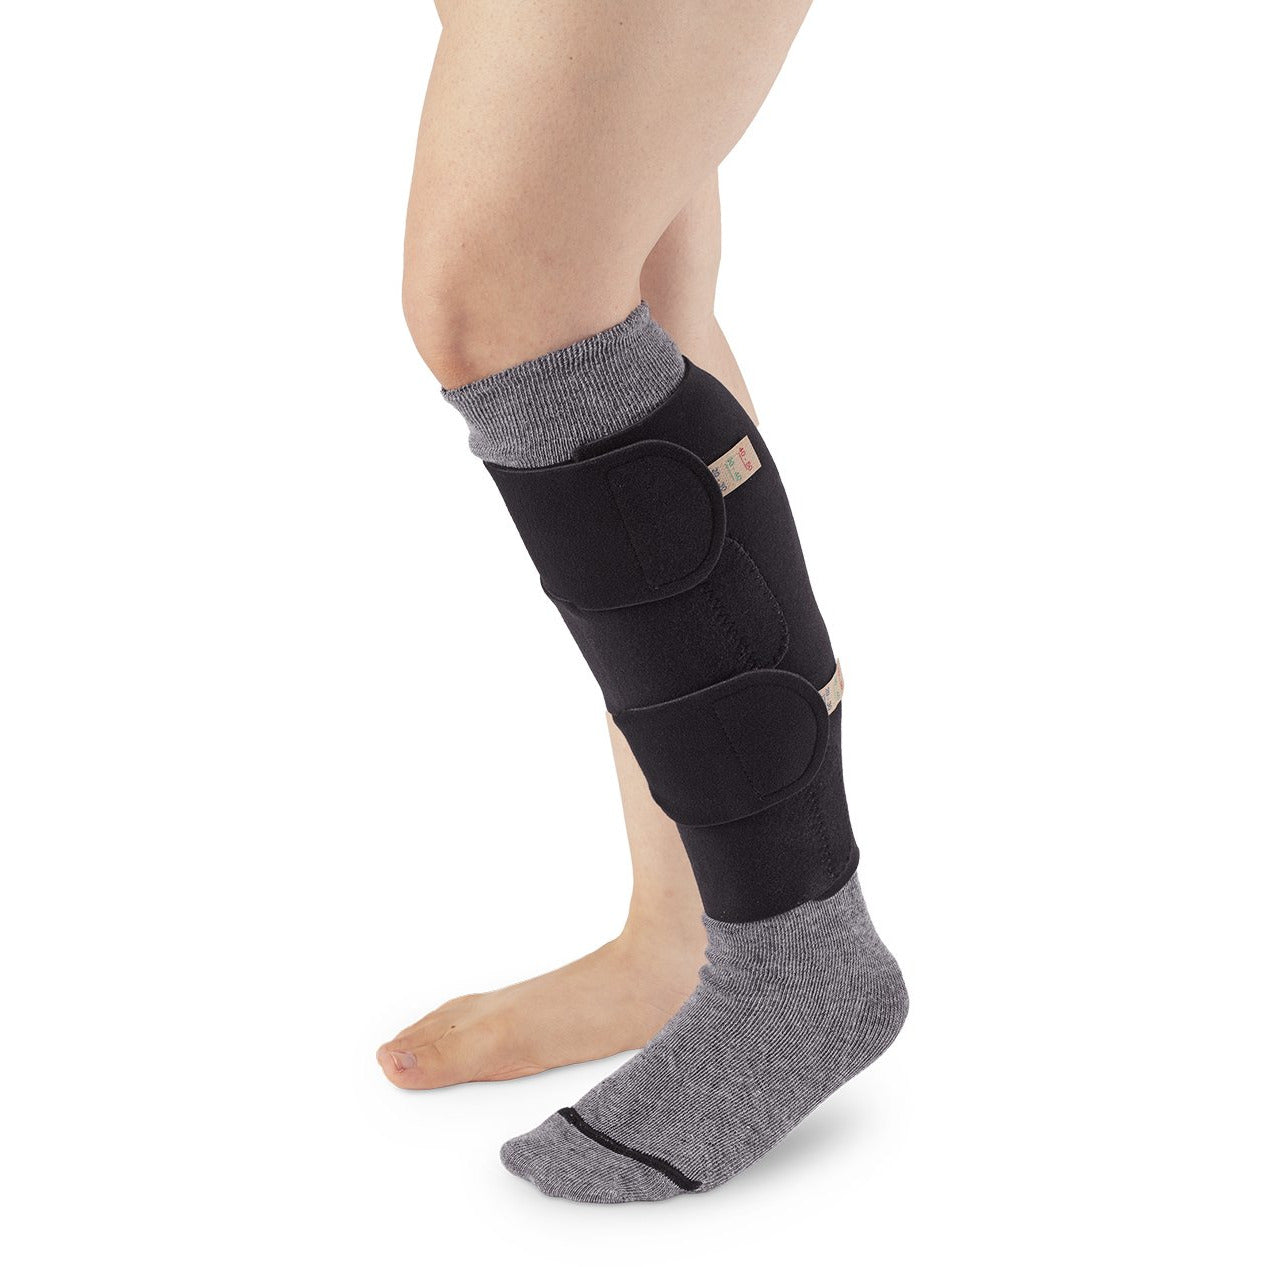 CompreCares Compression Strap Extender for Leg or Foot